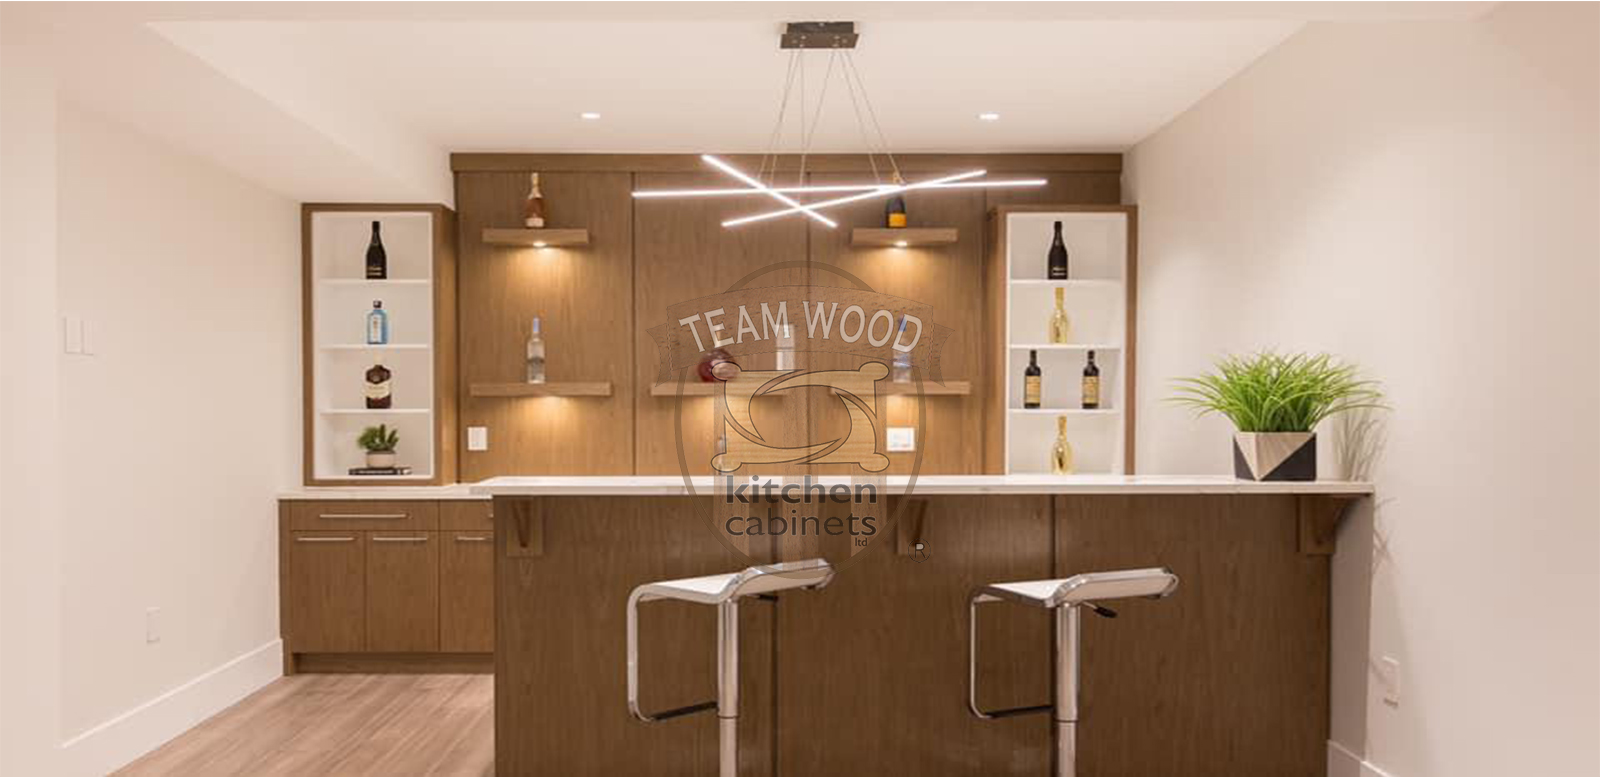 Teamwood-Bar-Cabinets (8).jpg